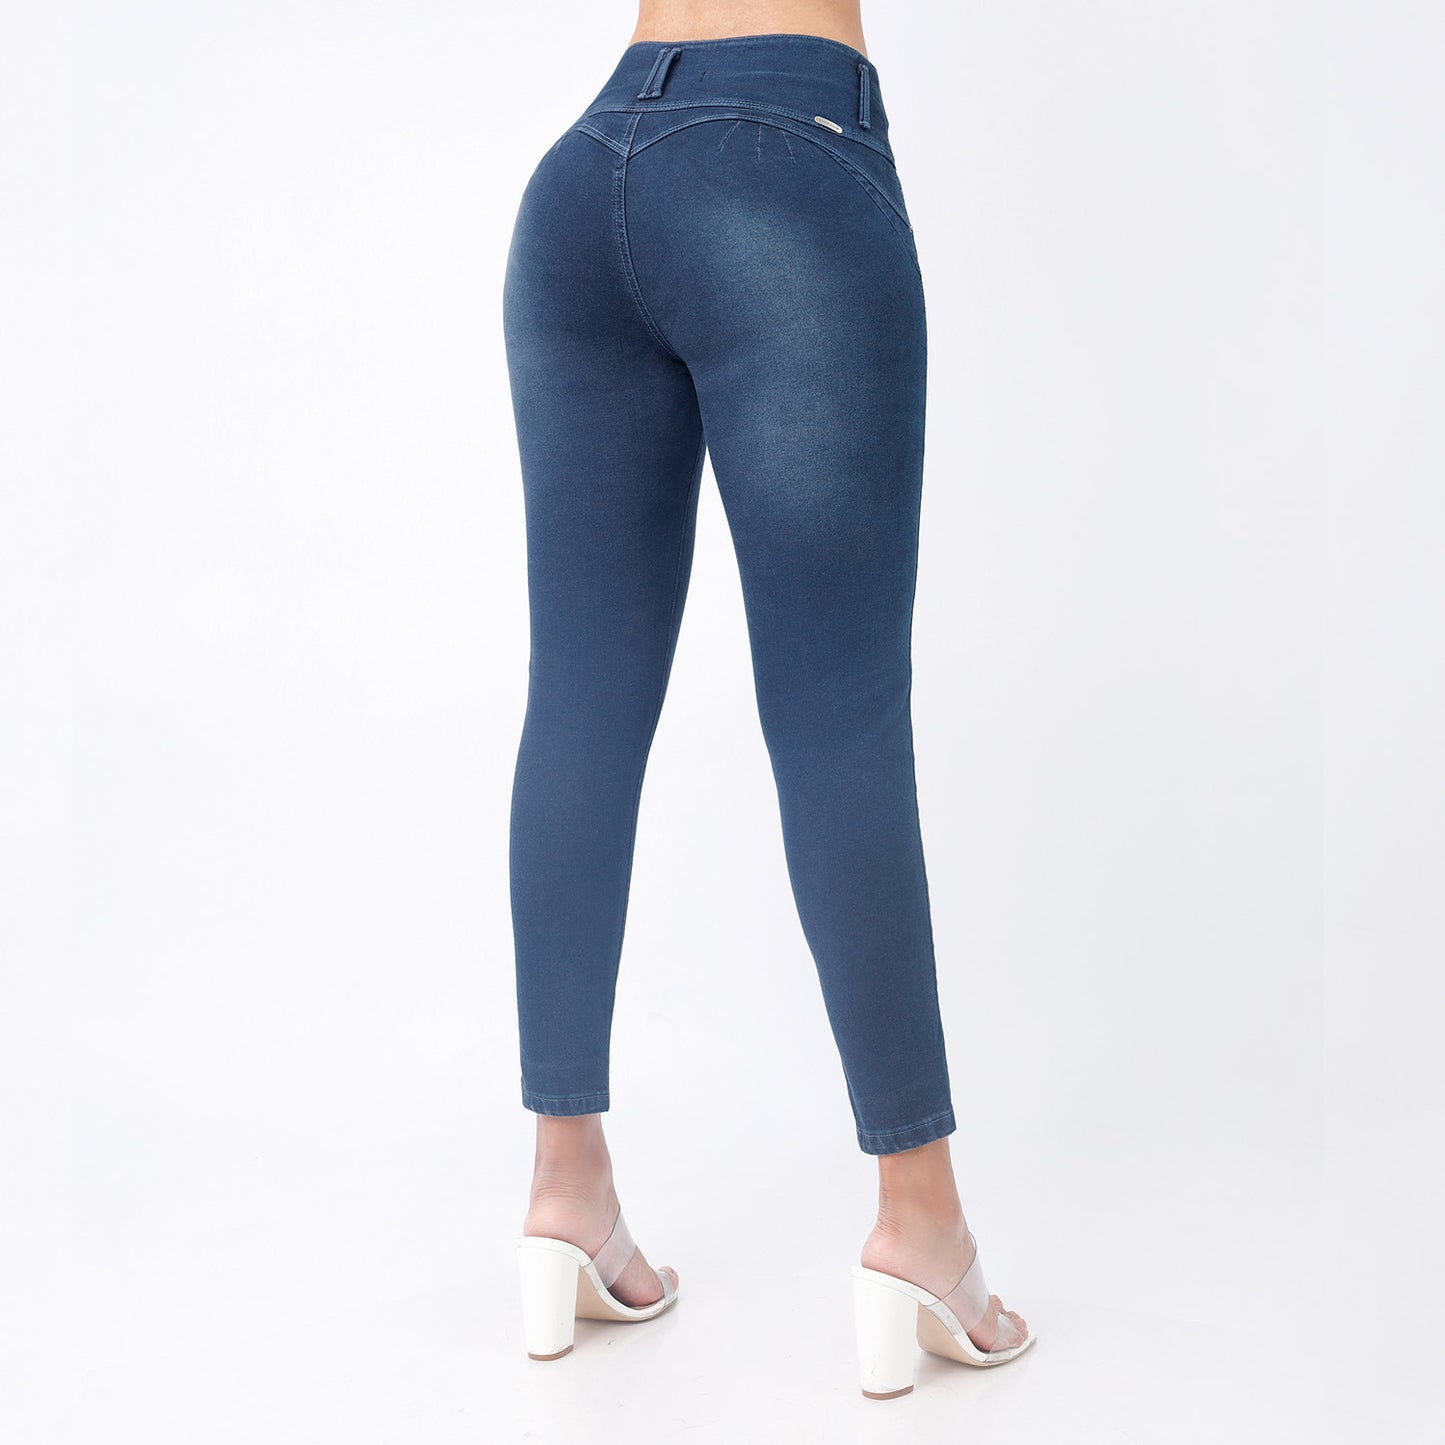 Jeans Push Up Mujer Semimoda Pitillo Tobillero Cintura Gráfito – 230194